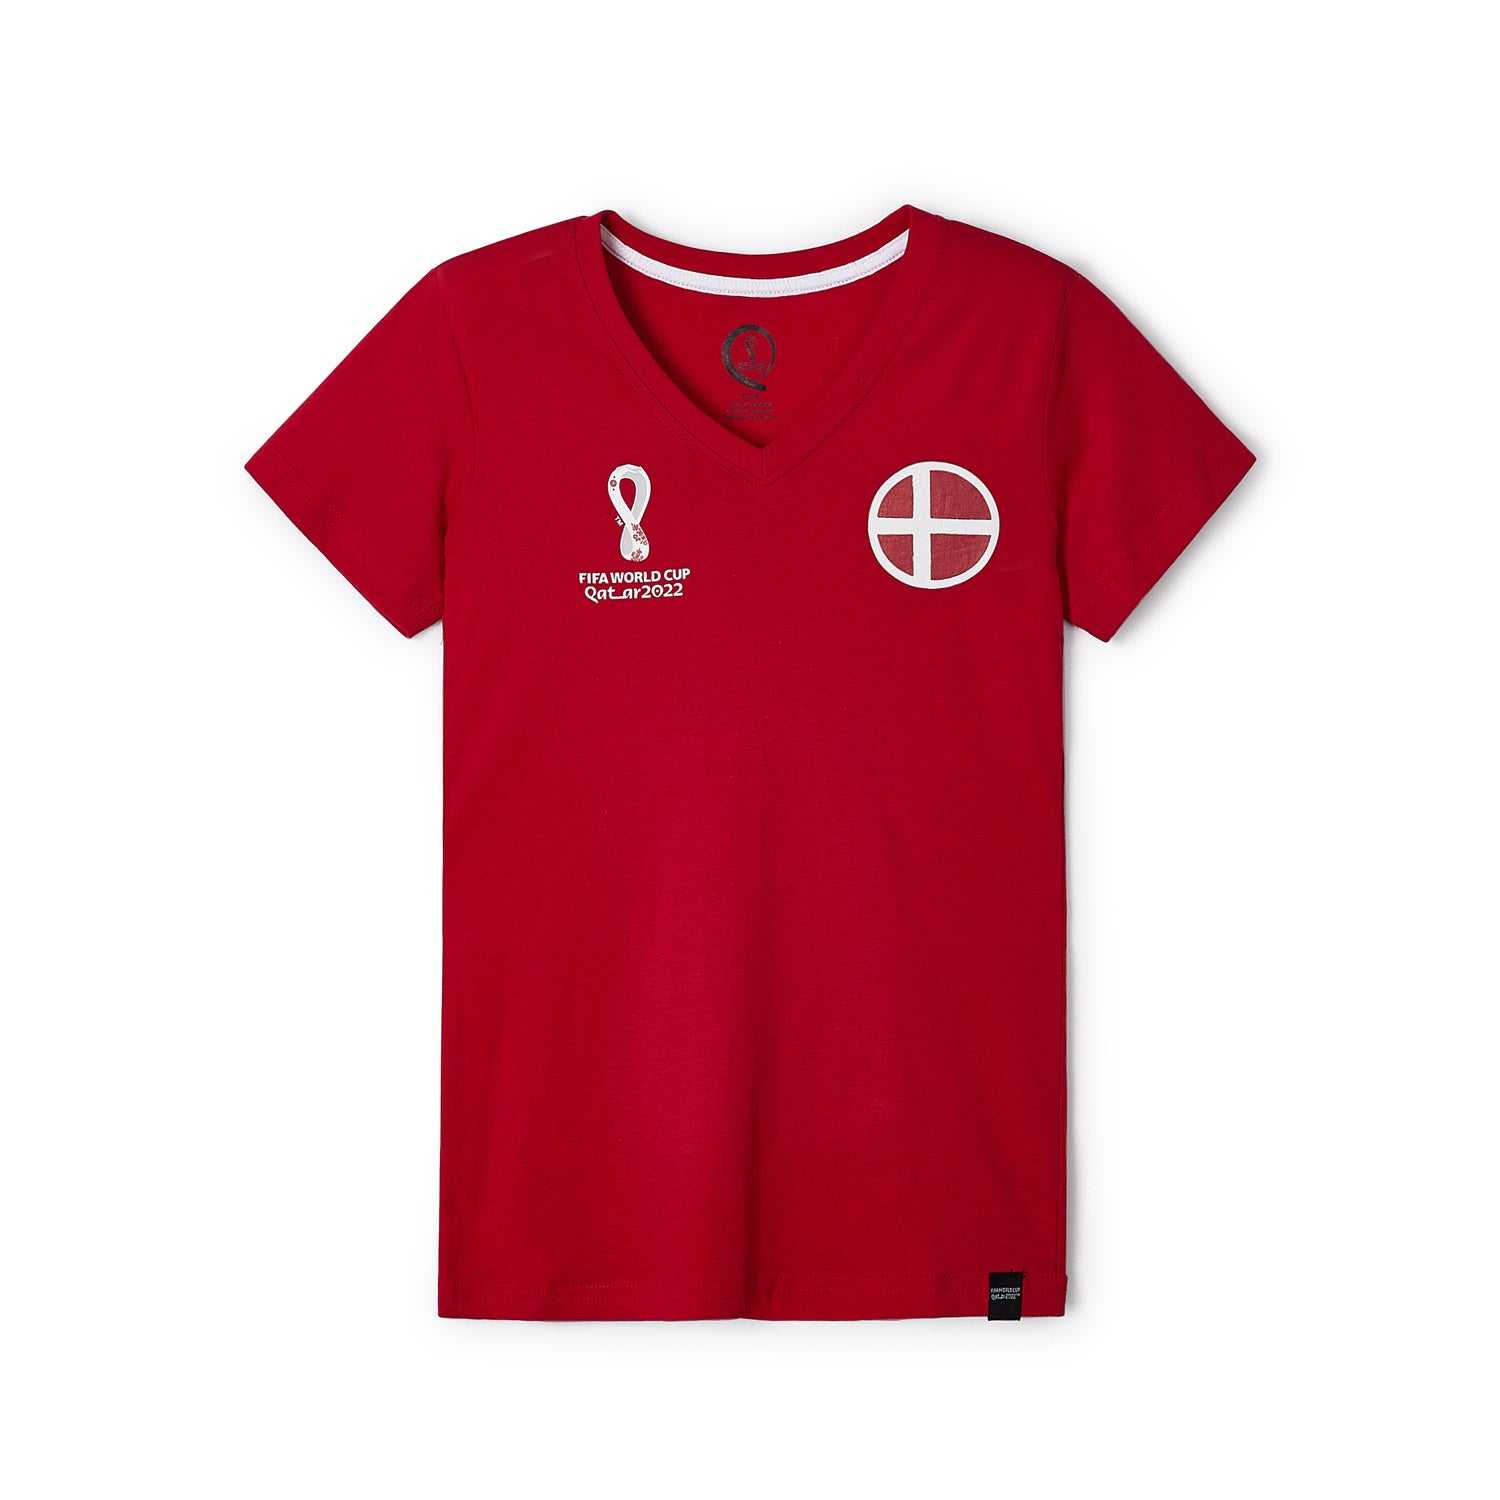 2022 World Cup Denmark Red T-Shirt - Womens